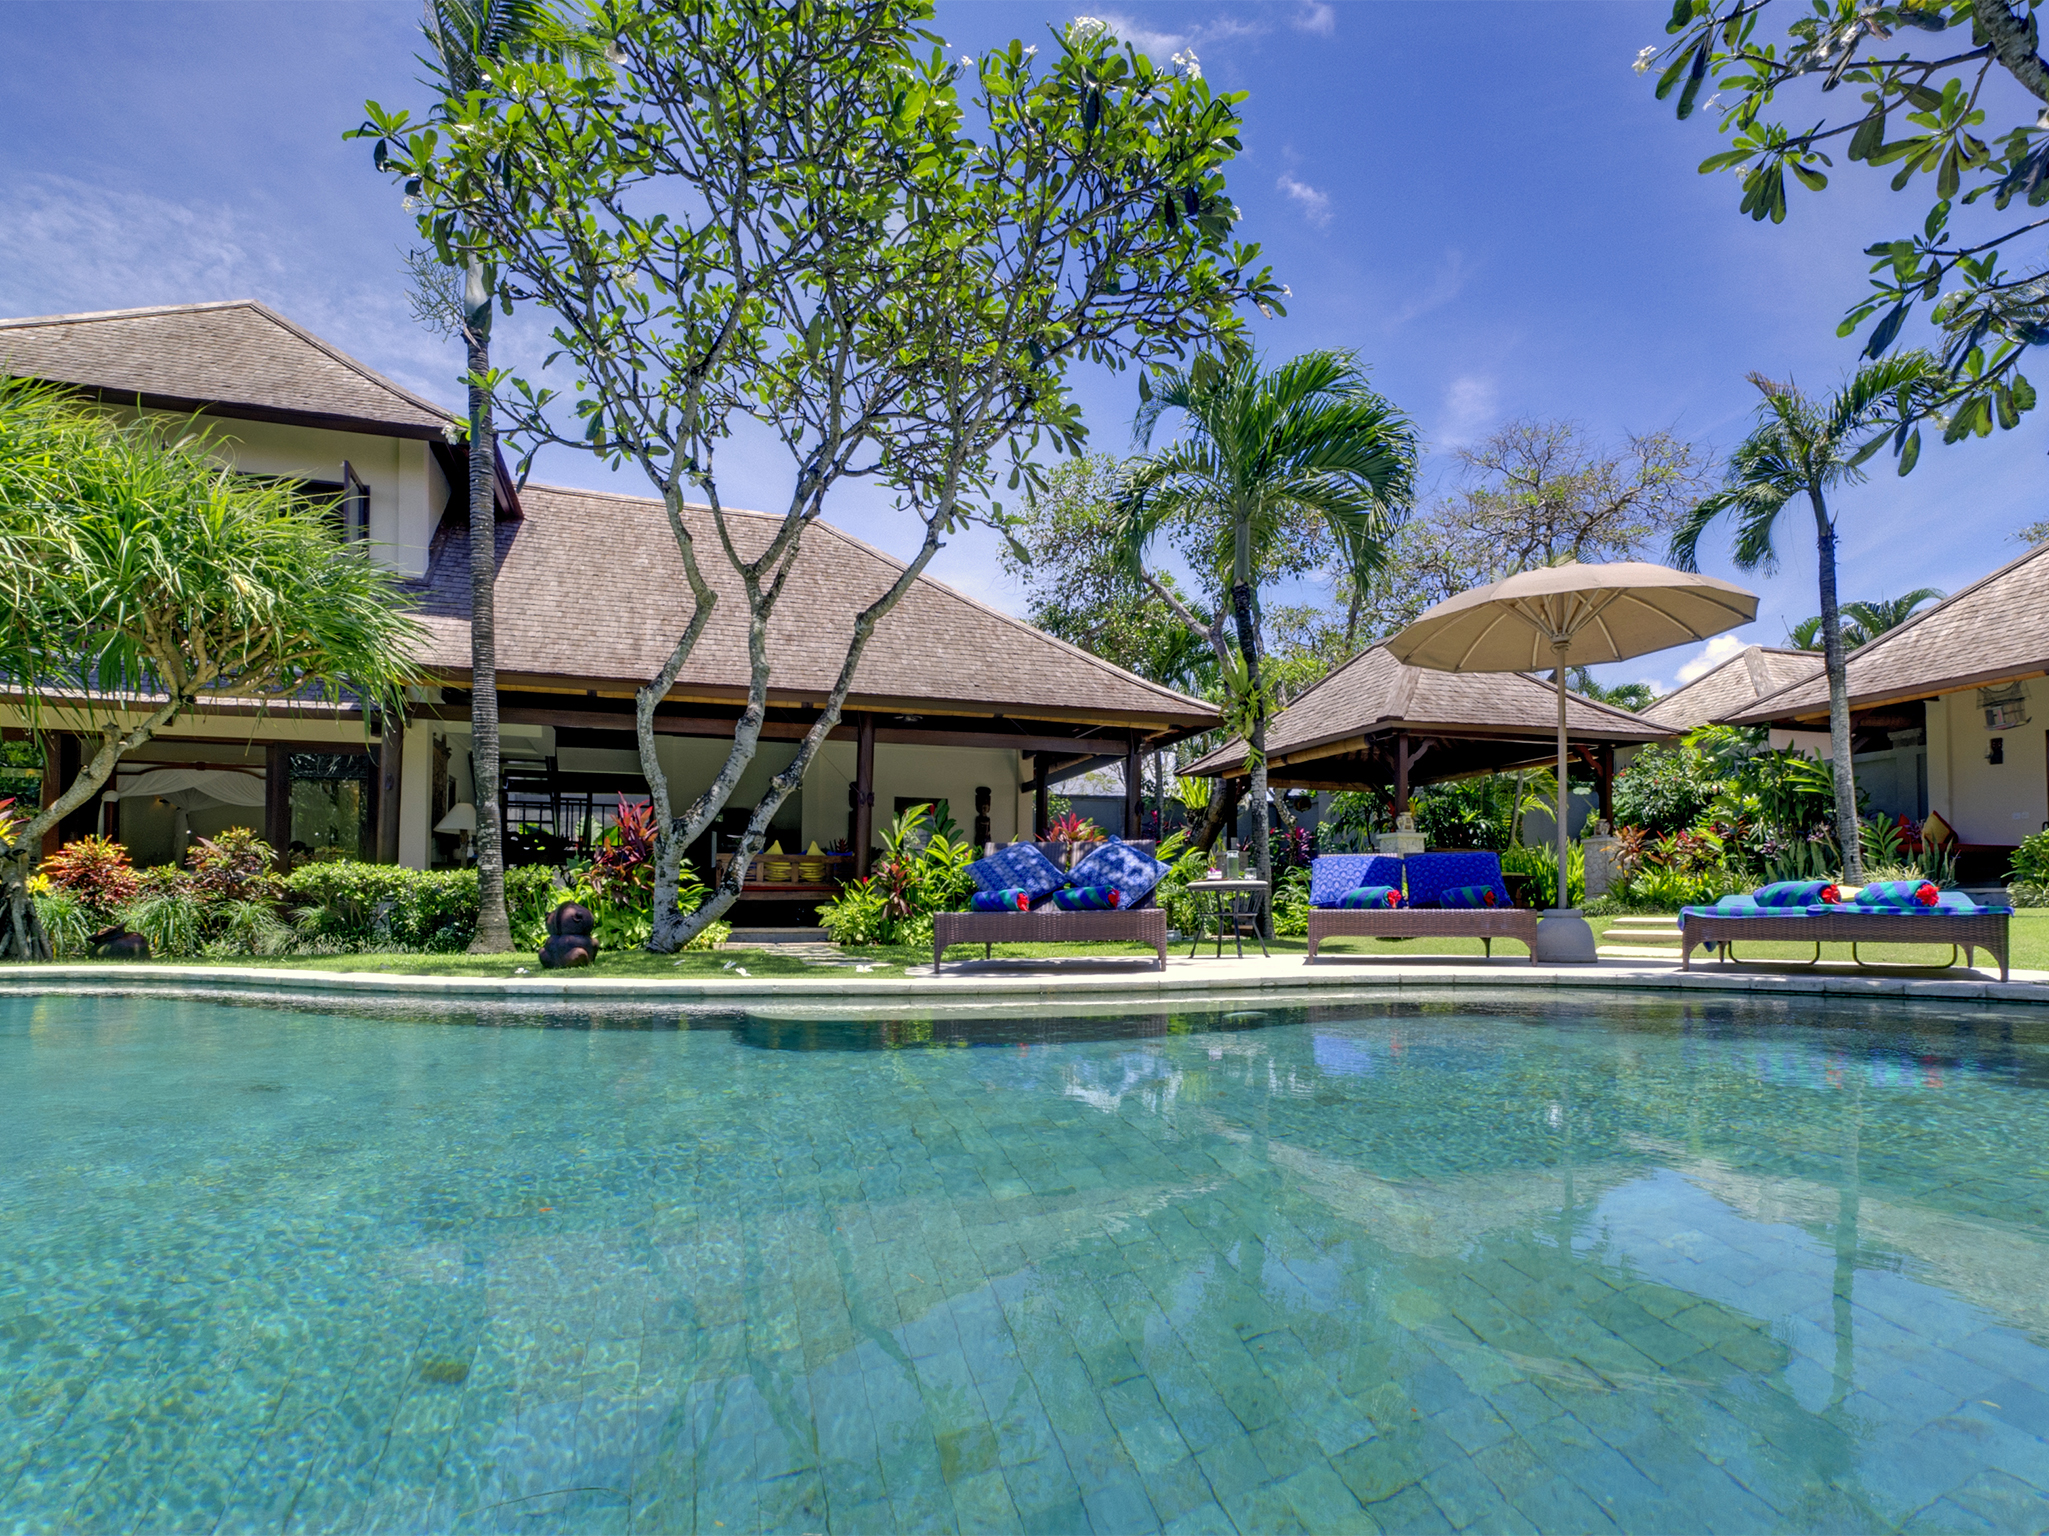 Villa Kakatua - Pool and villa - Villa Kakatua, Canggu, Bali